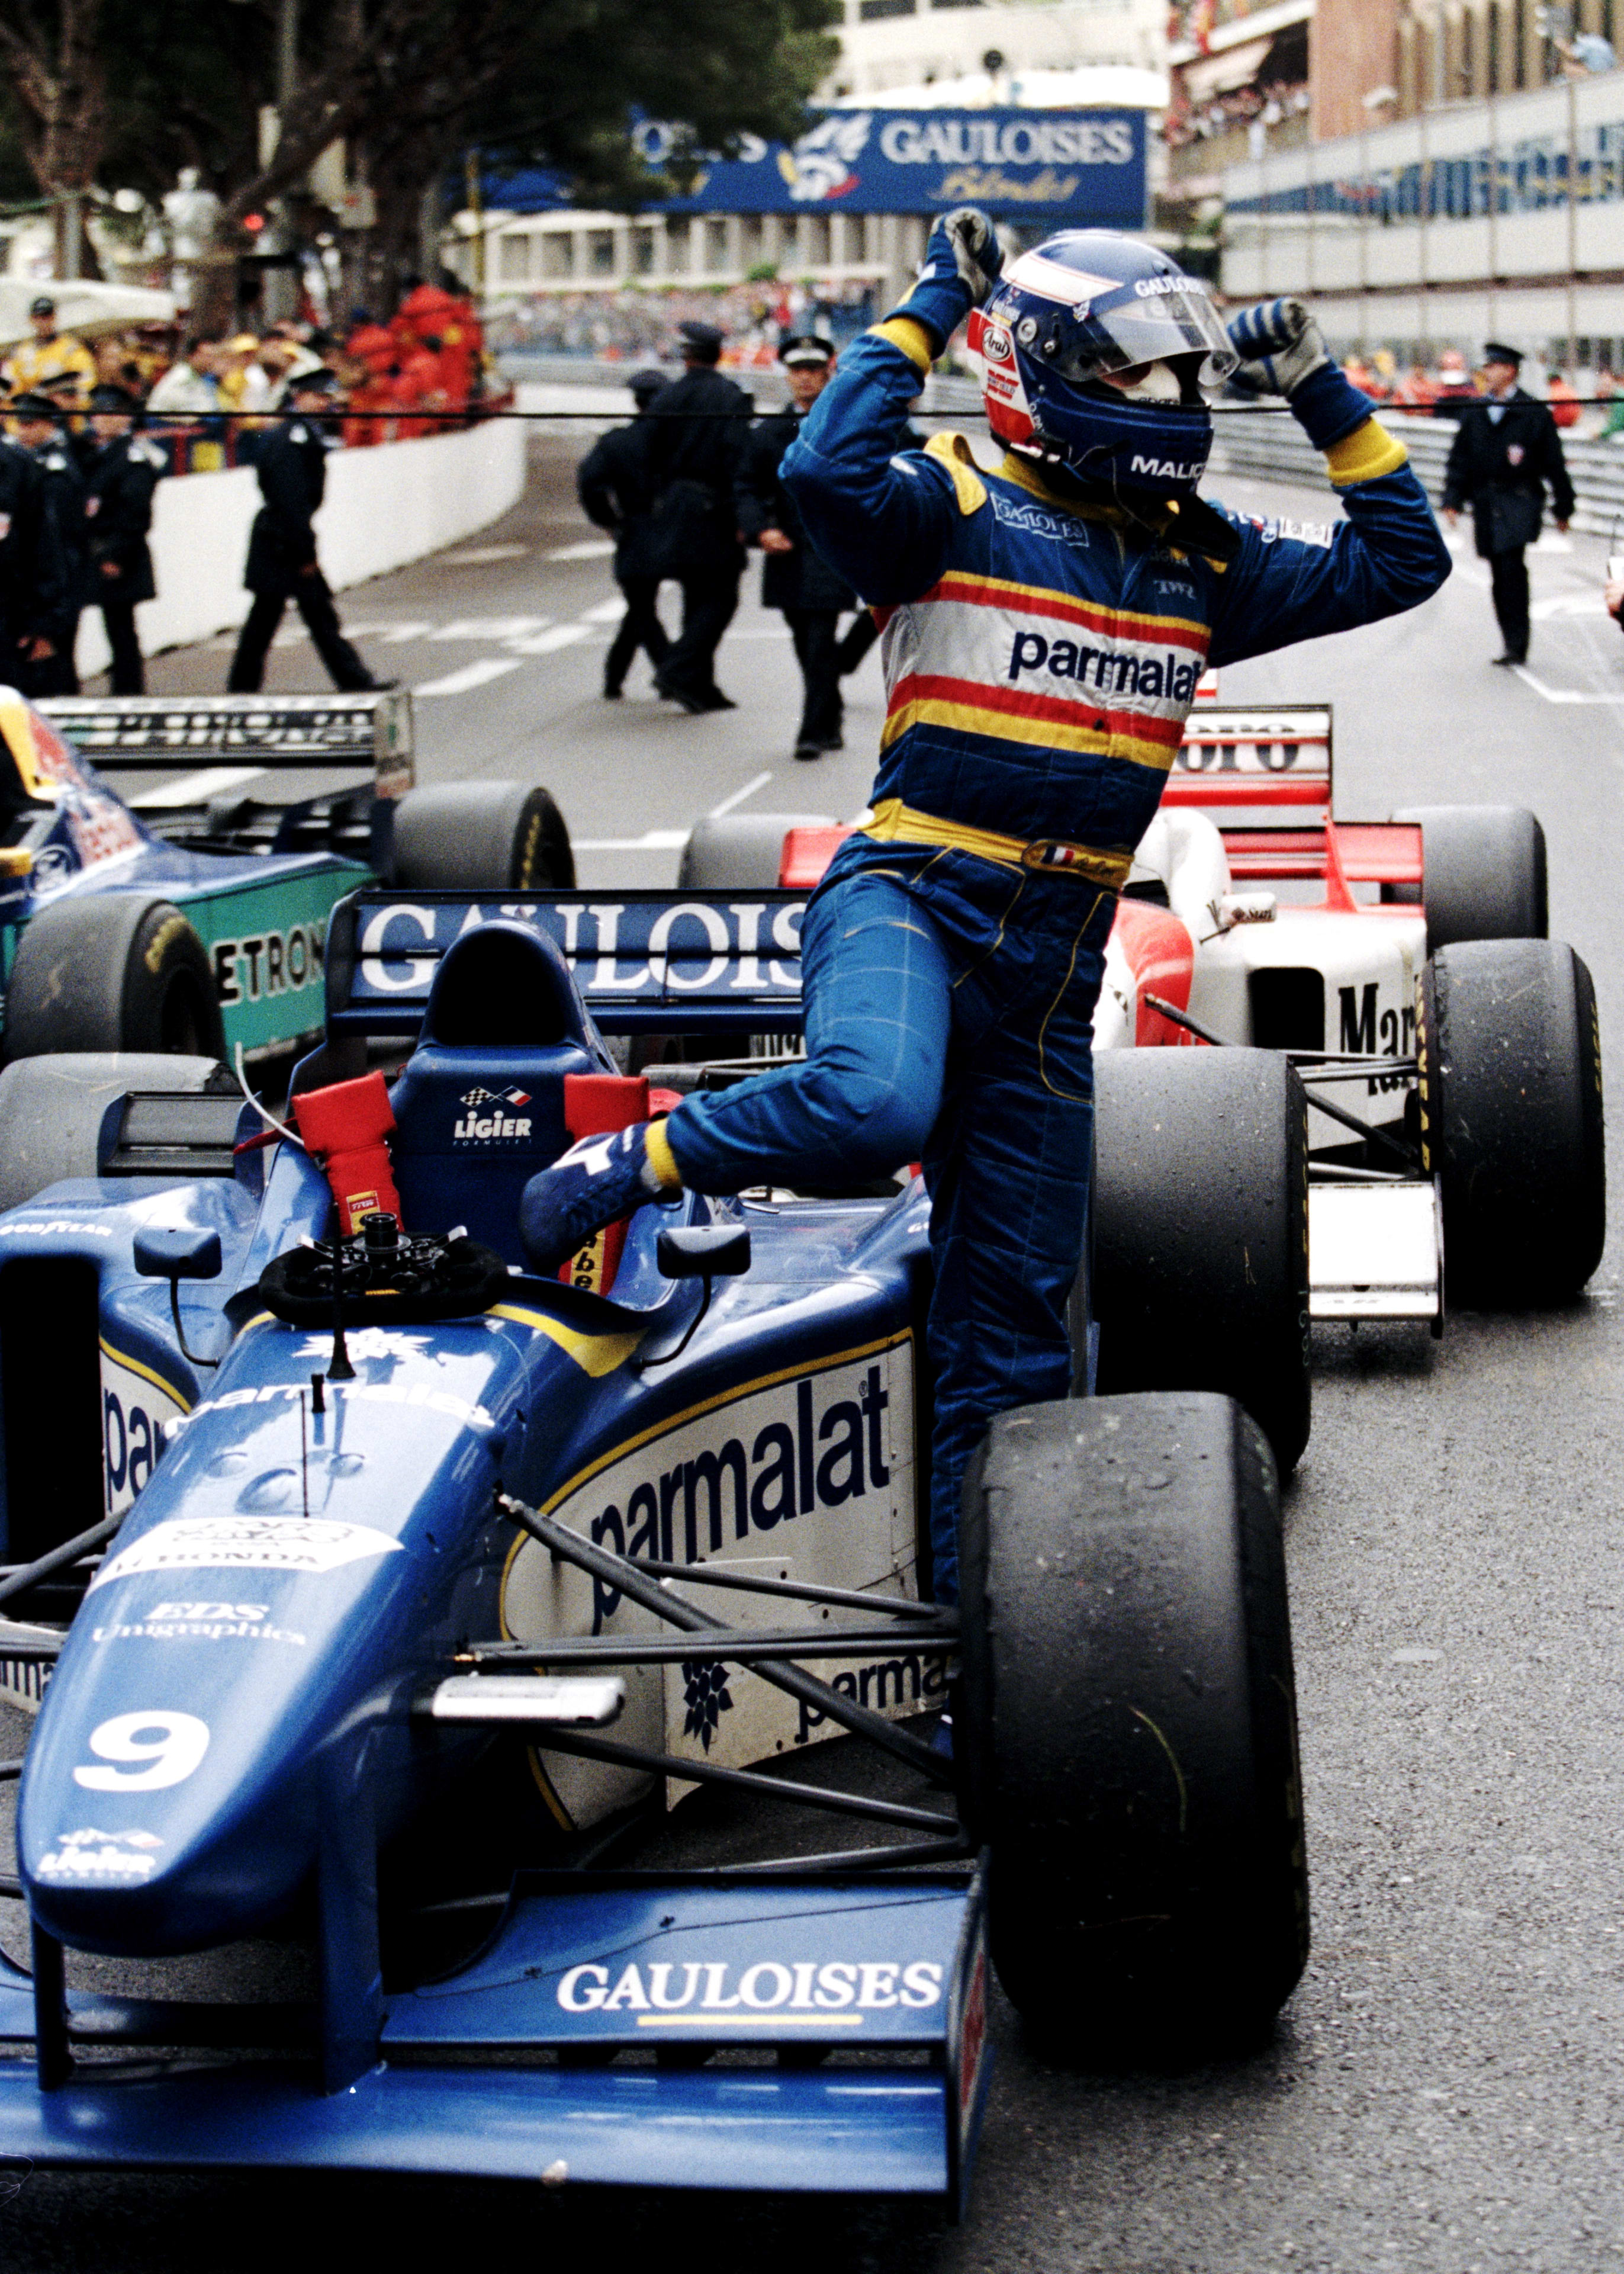 Olivier Panis on THAT 1996 Monaco Grand Prix victory Formula 1®